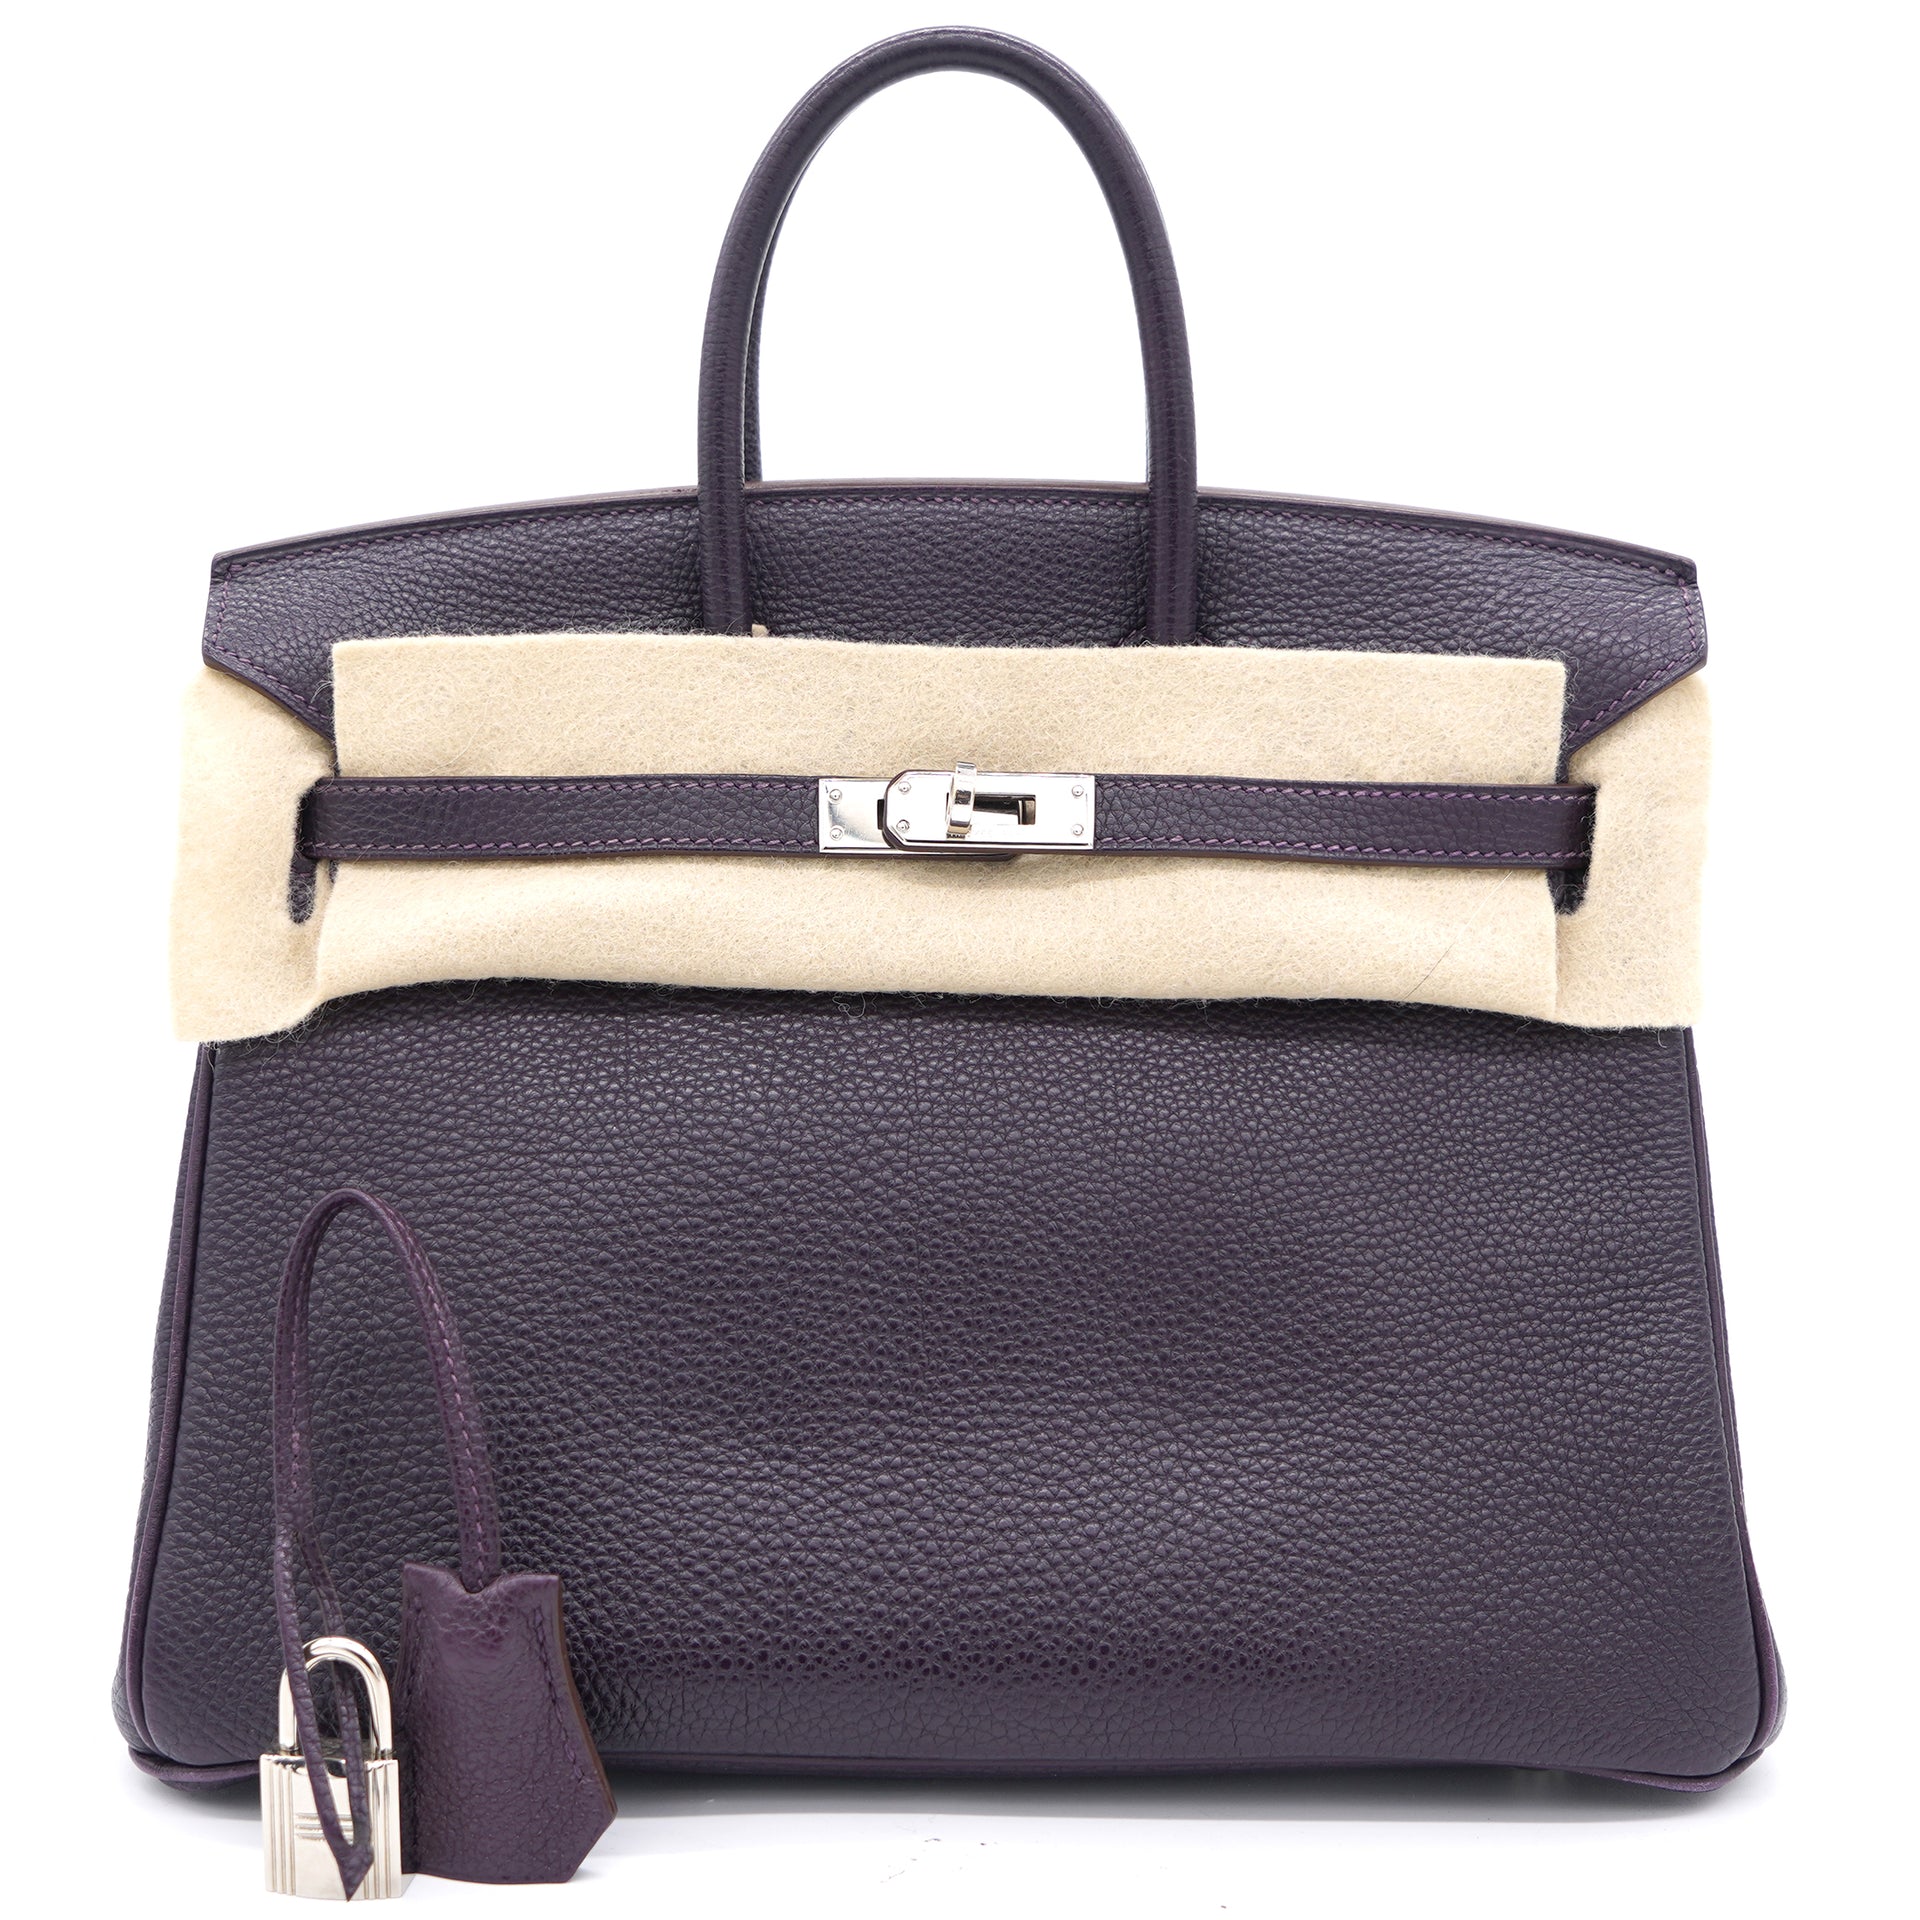 Hermes Birkin Womens Handbags 2020 Ss, Black, Birkin 25